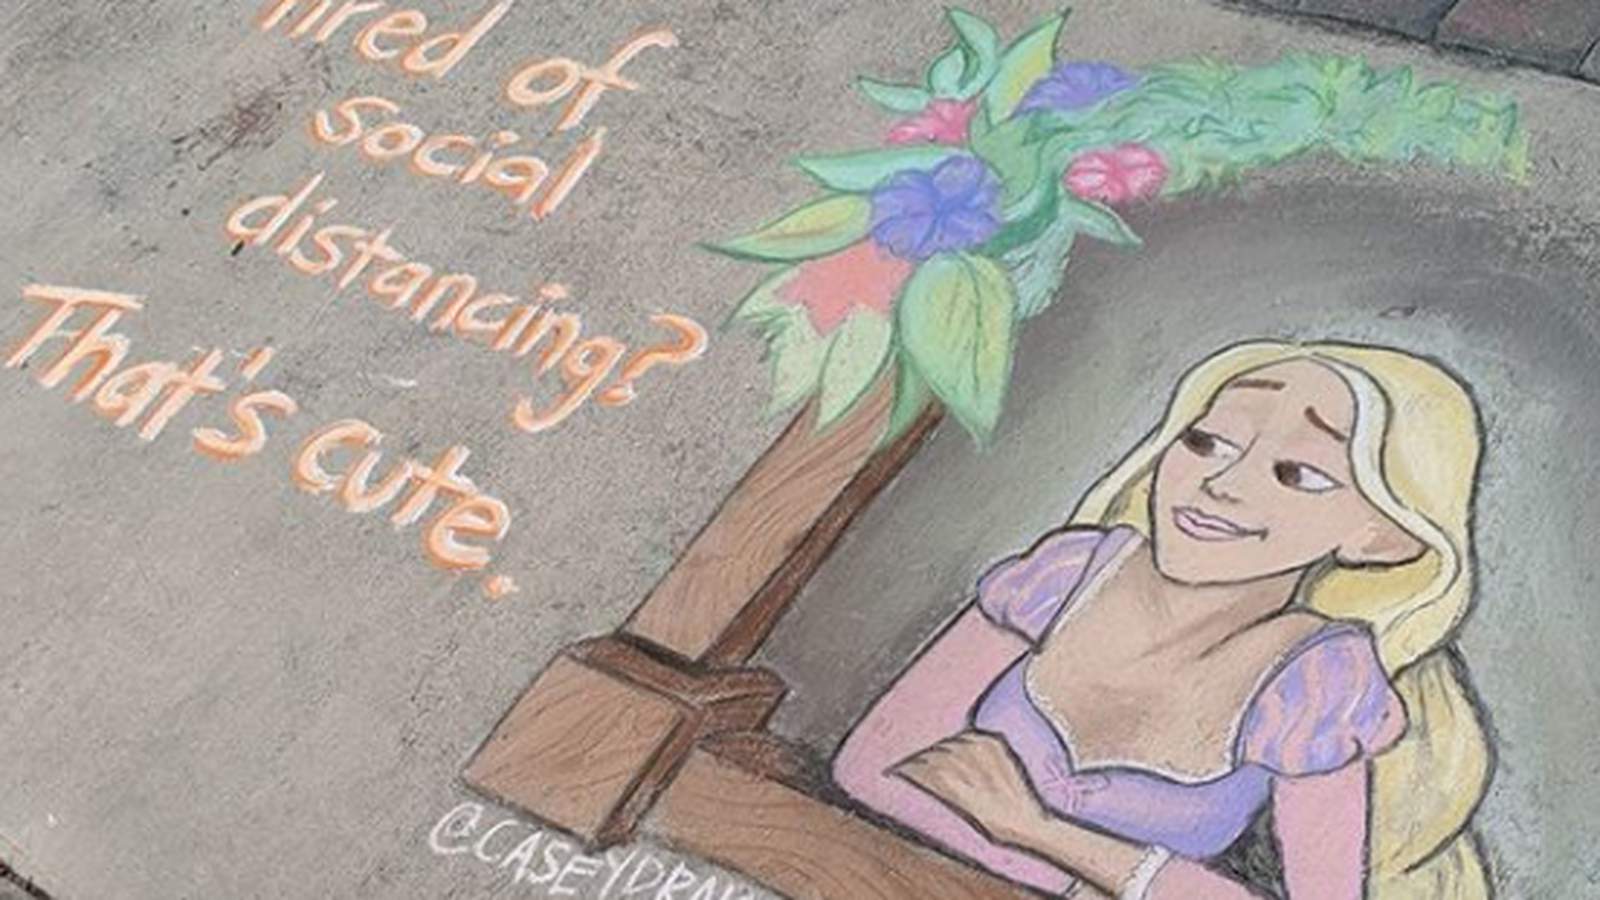 Winter Park mom brightens pandemic days with sidewalk chalk art, humor